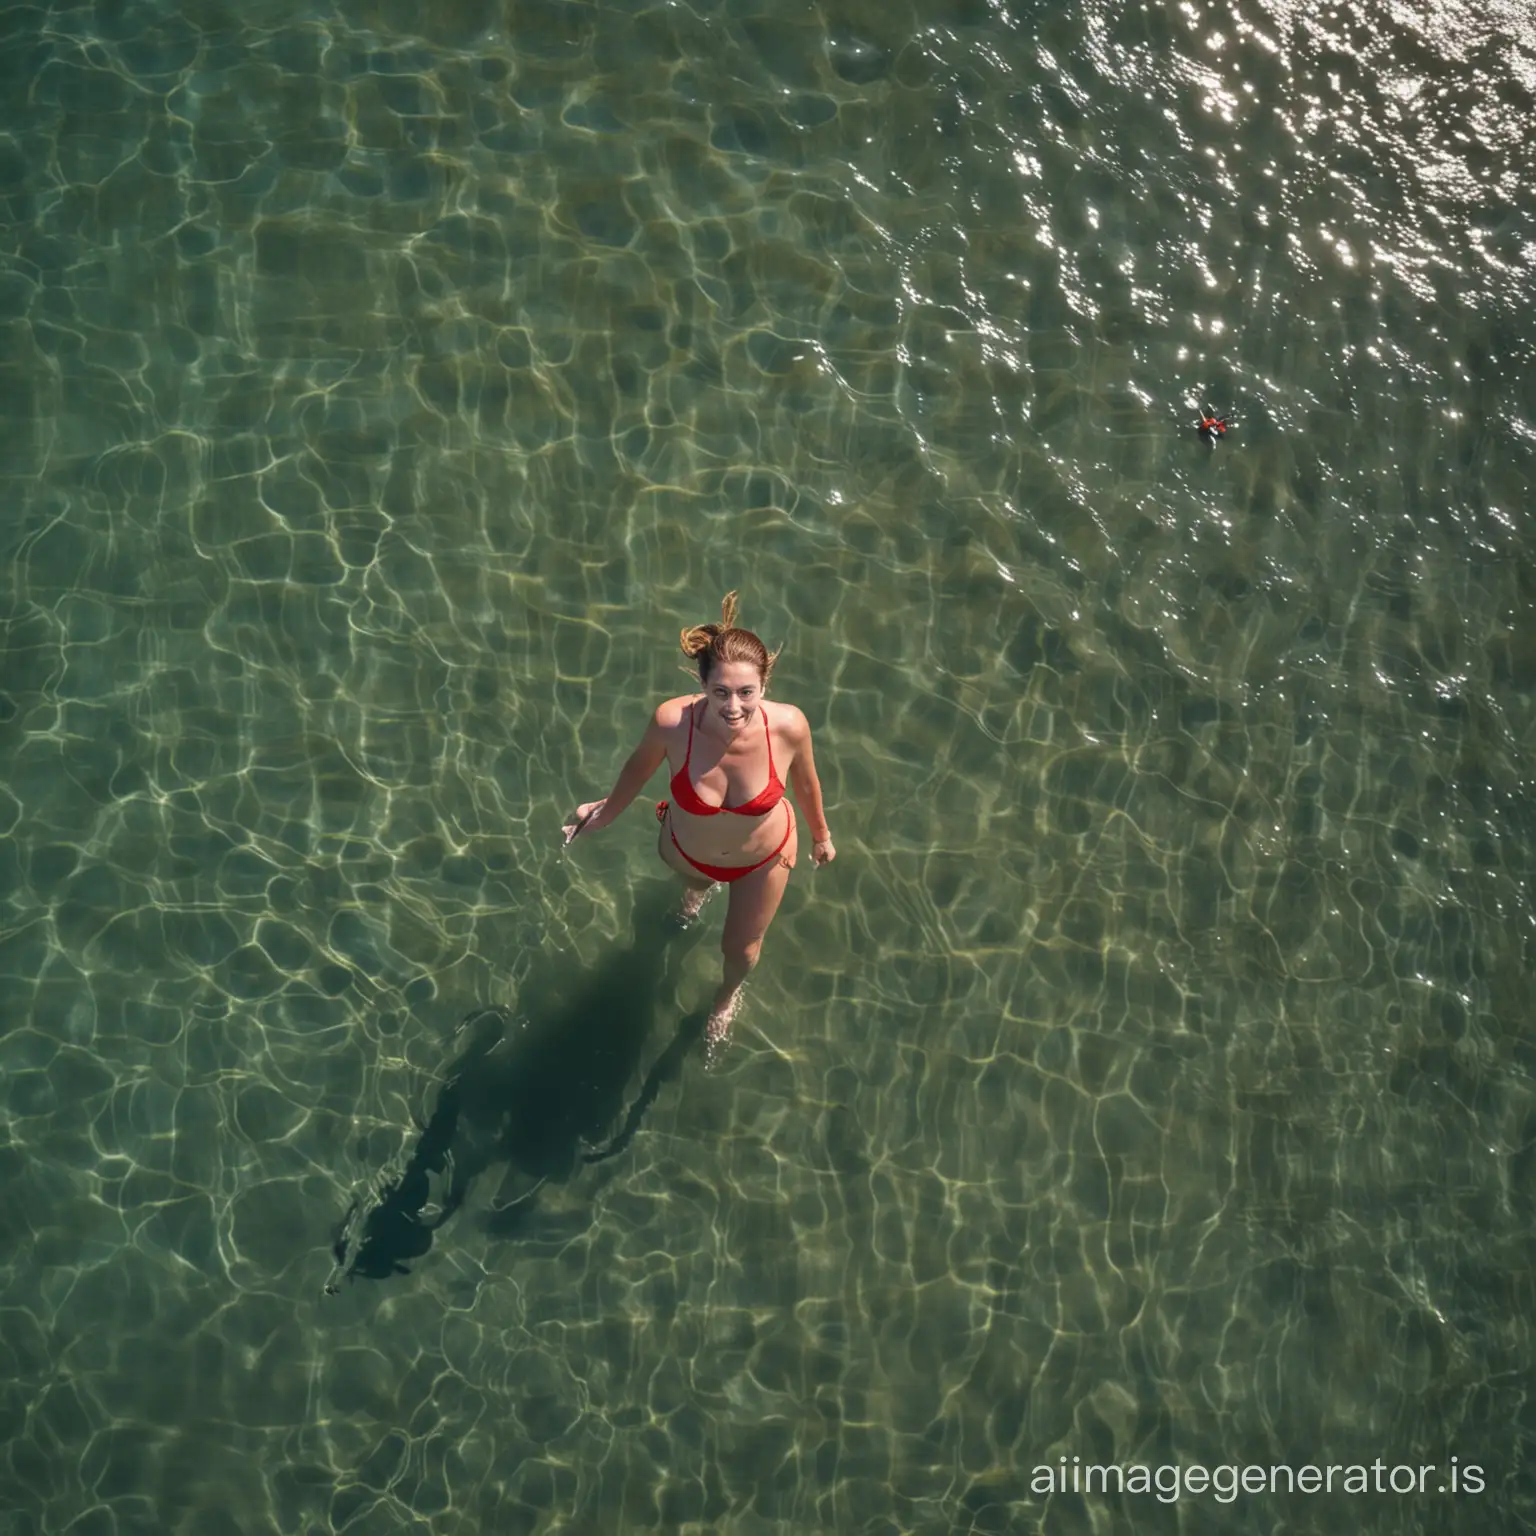 Woman-in-Red-Bikini-Walking-in-Ocean-Drone-View